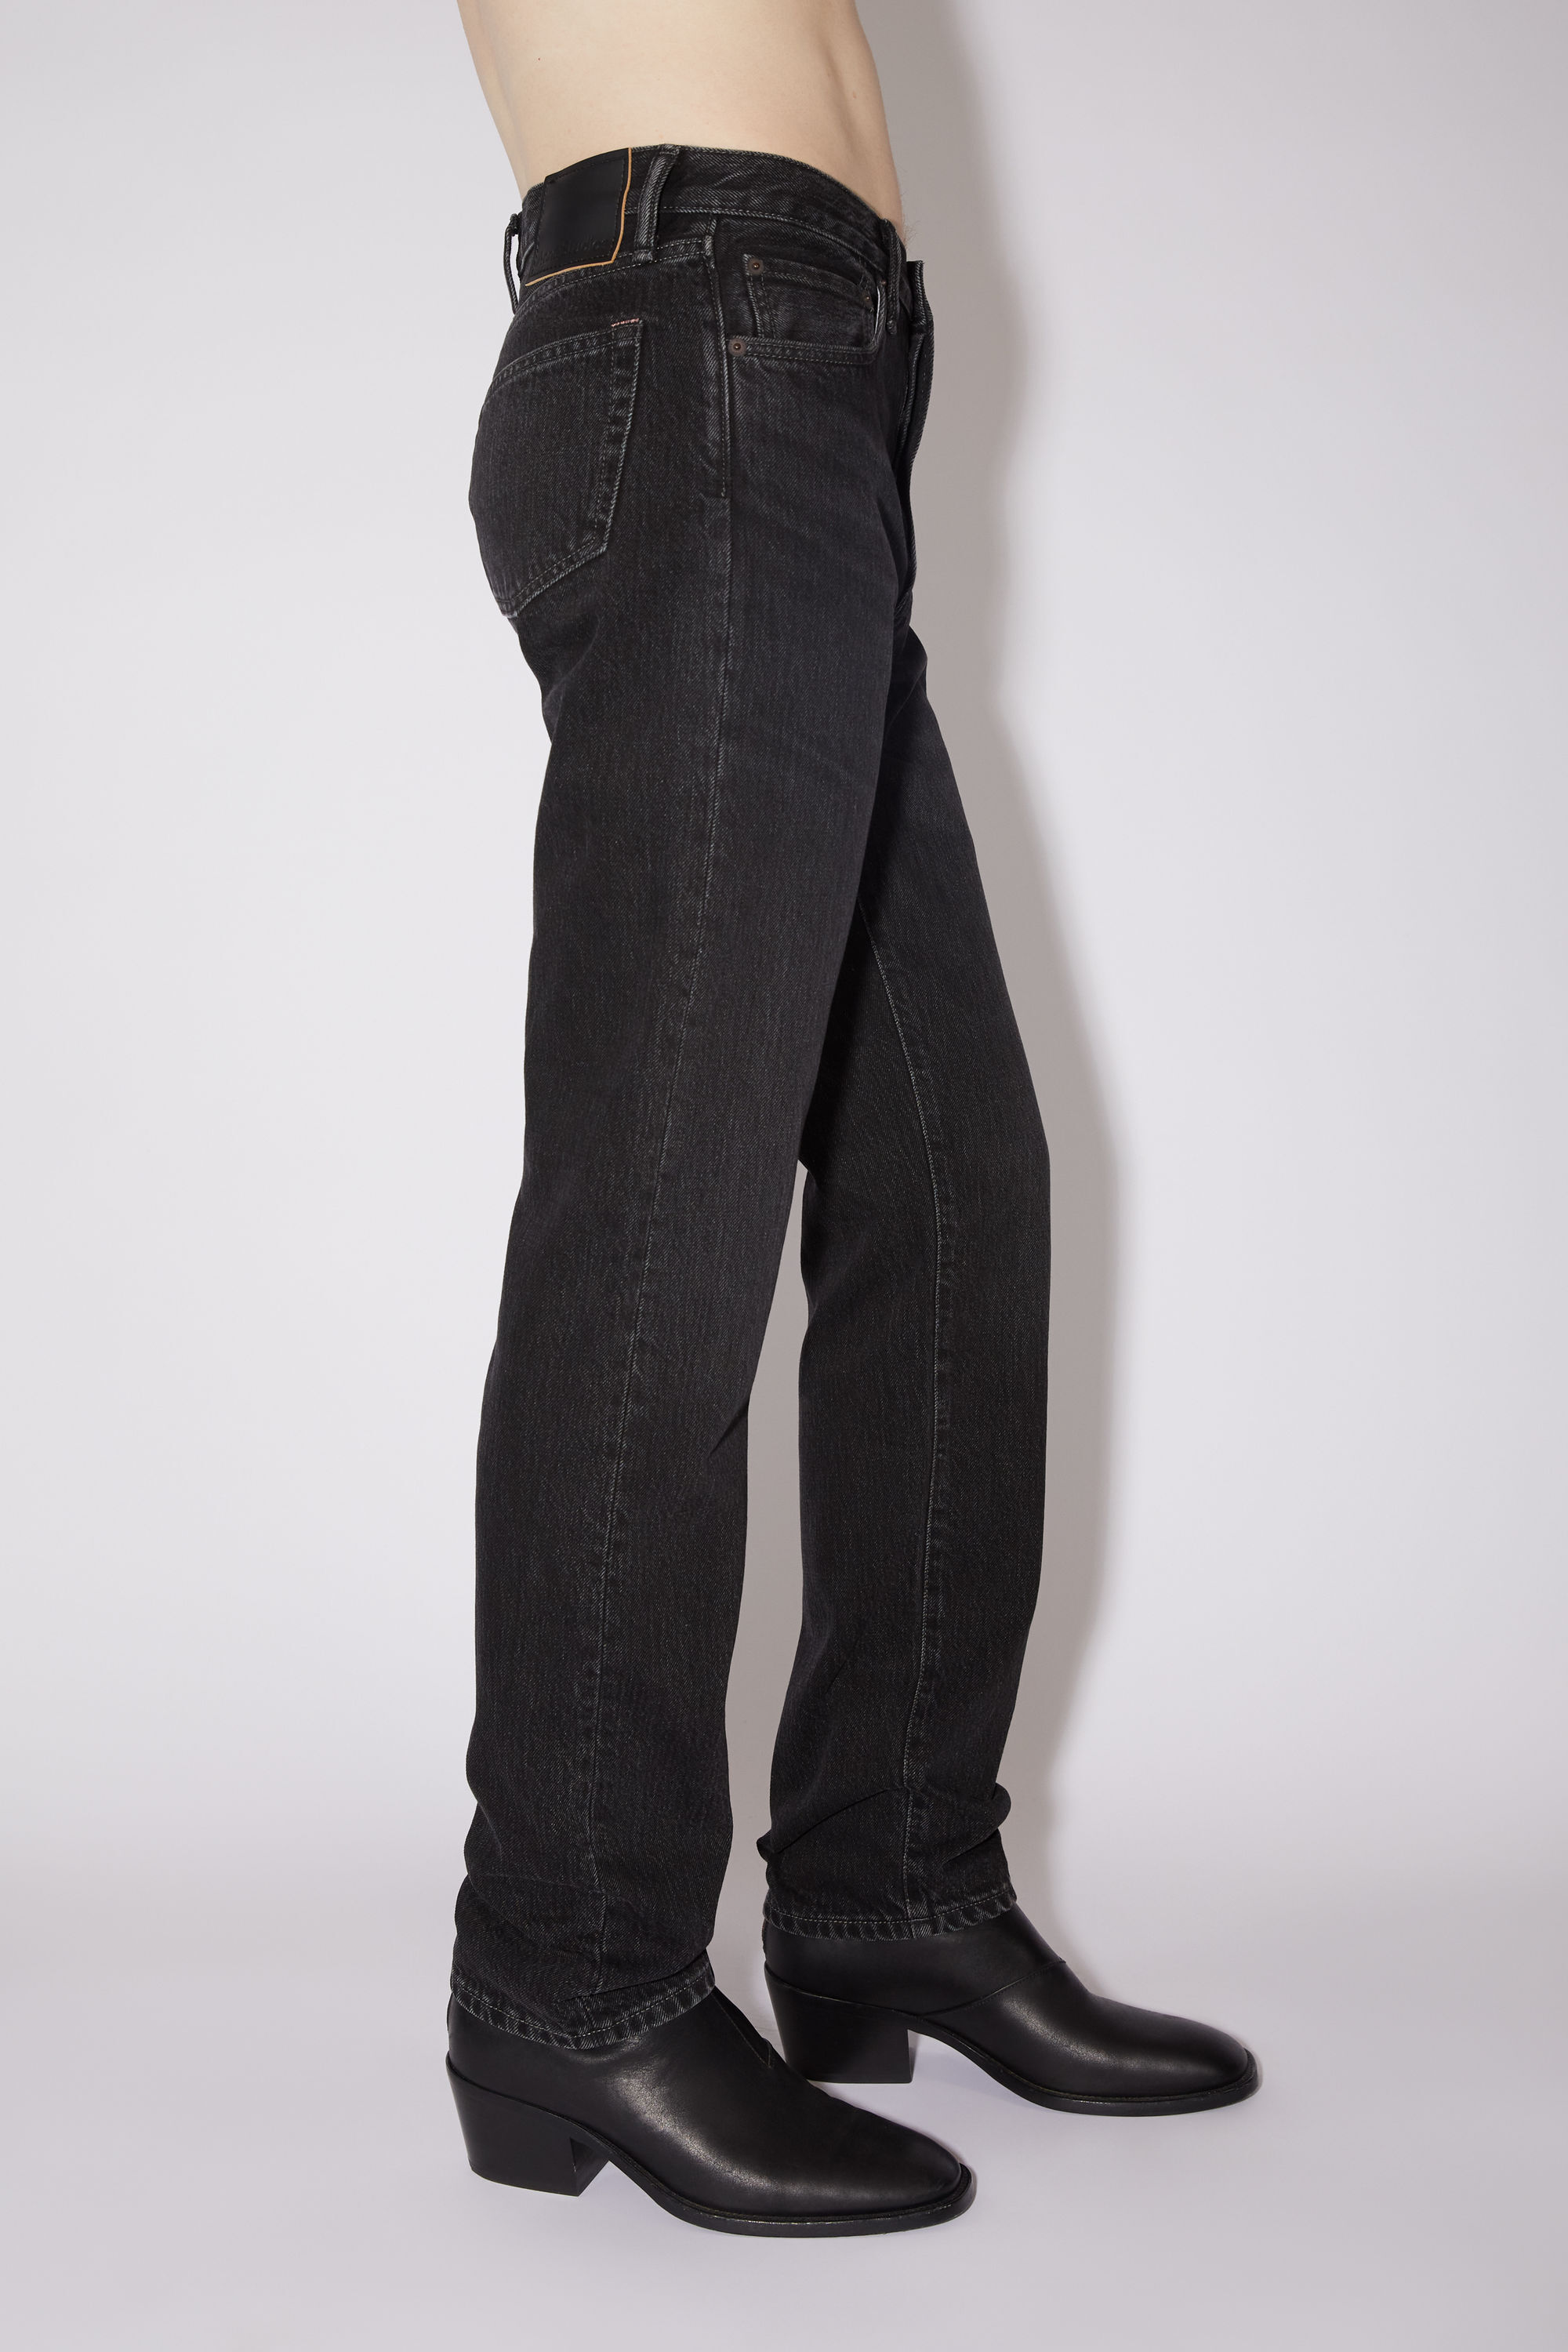 Acne Studios - Regular fit jeans -1996 - Black